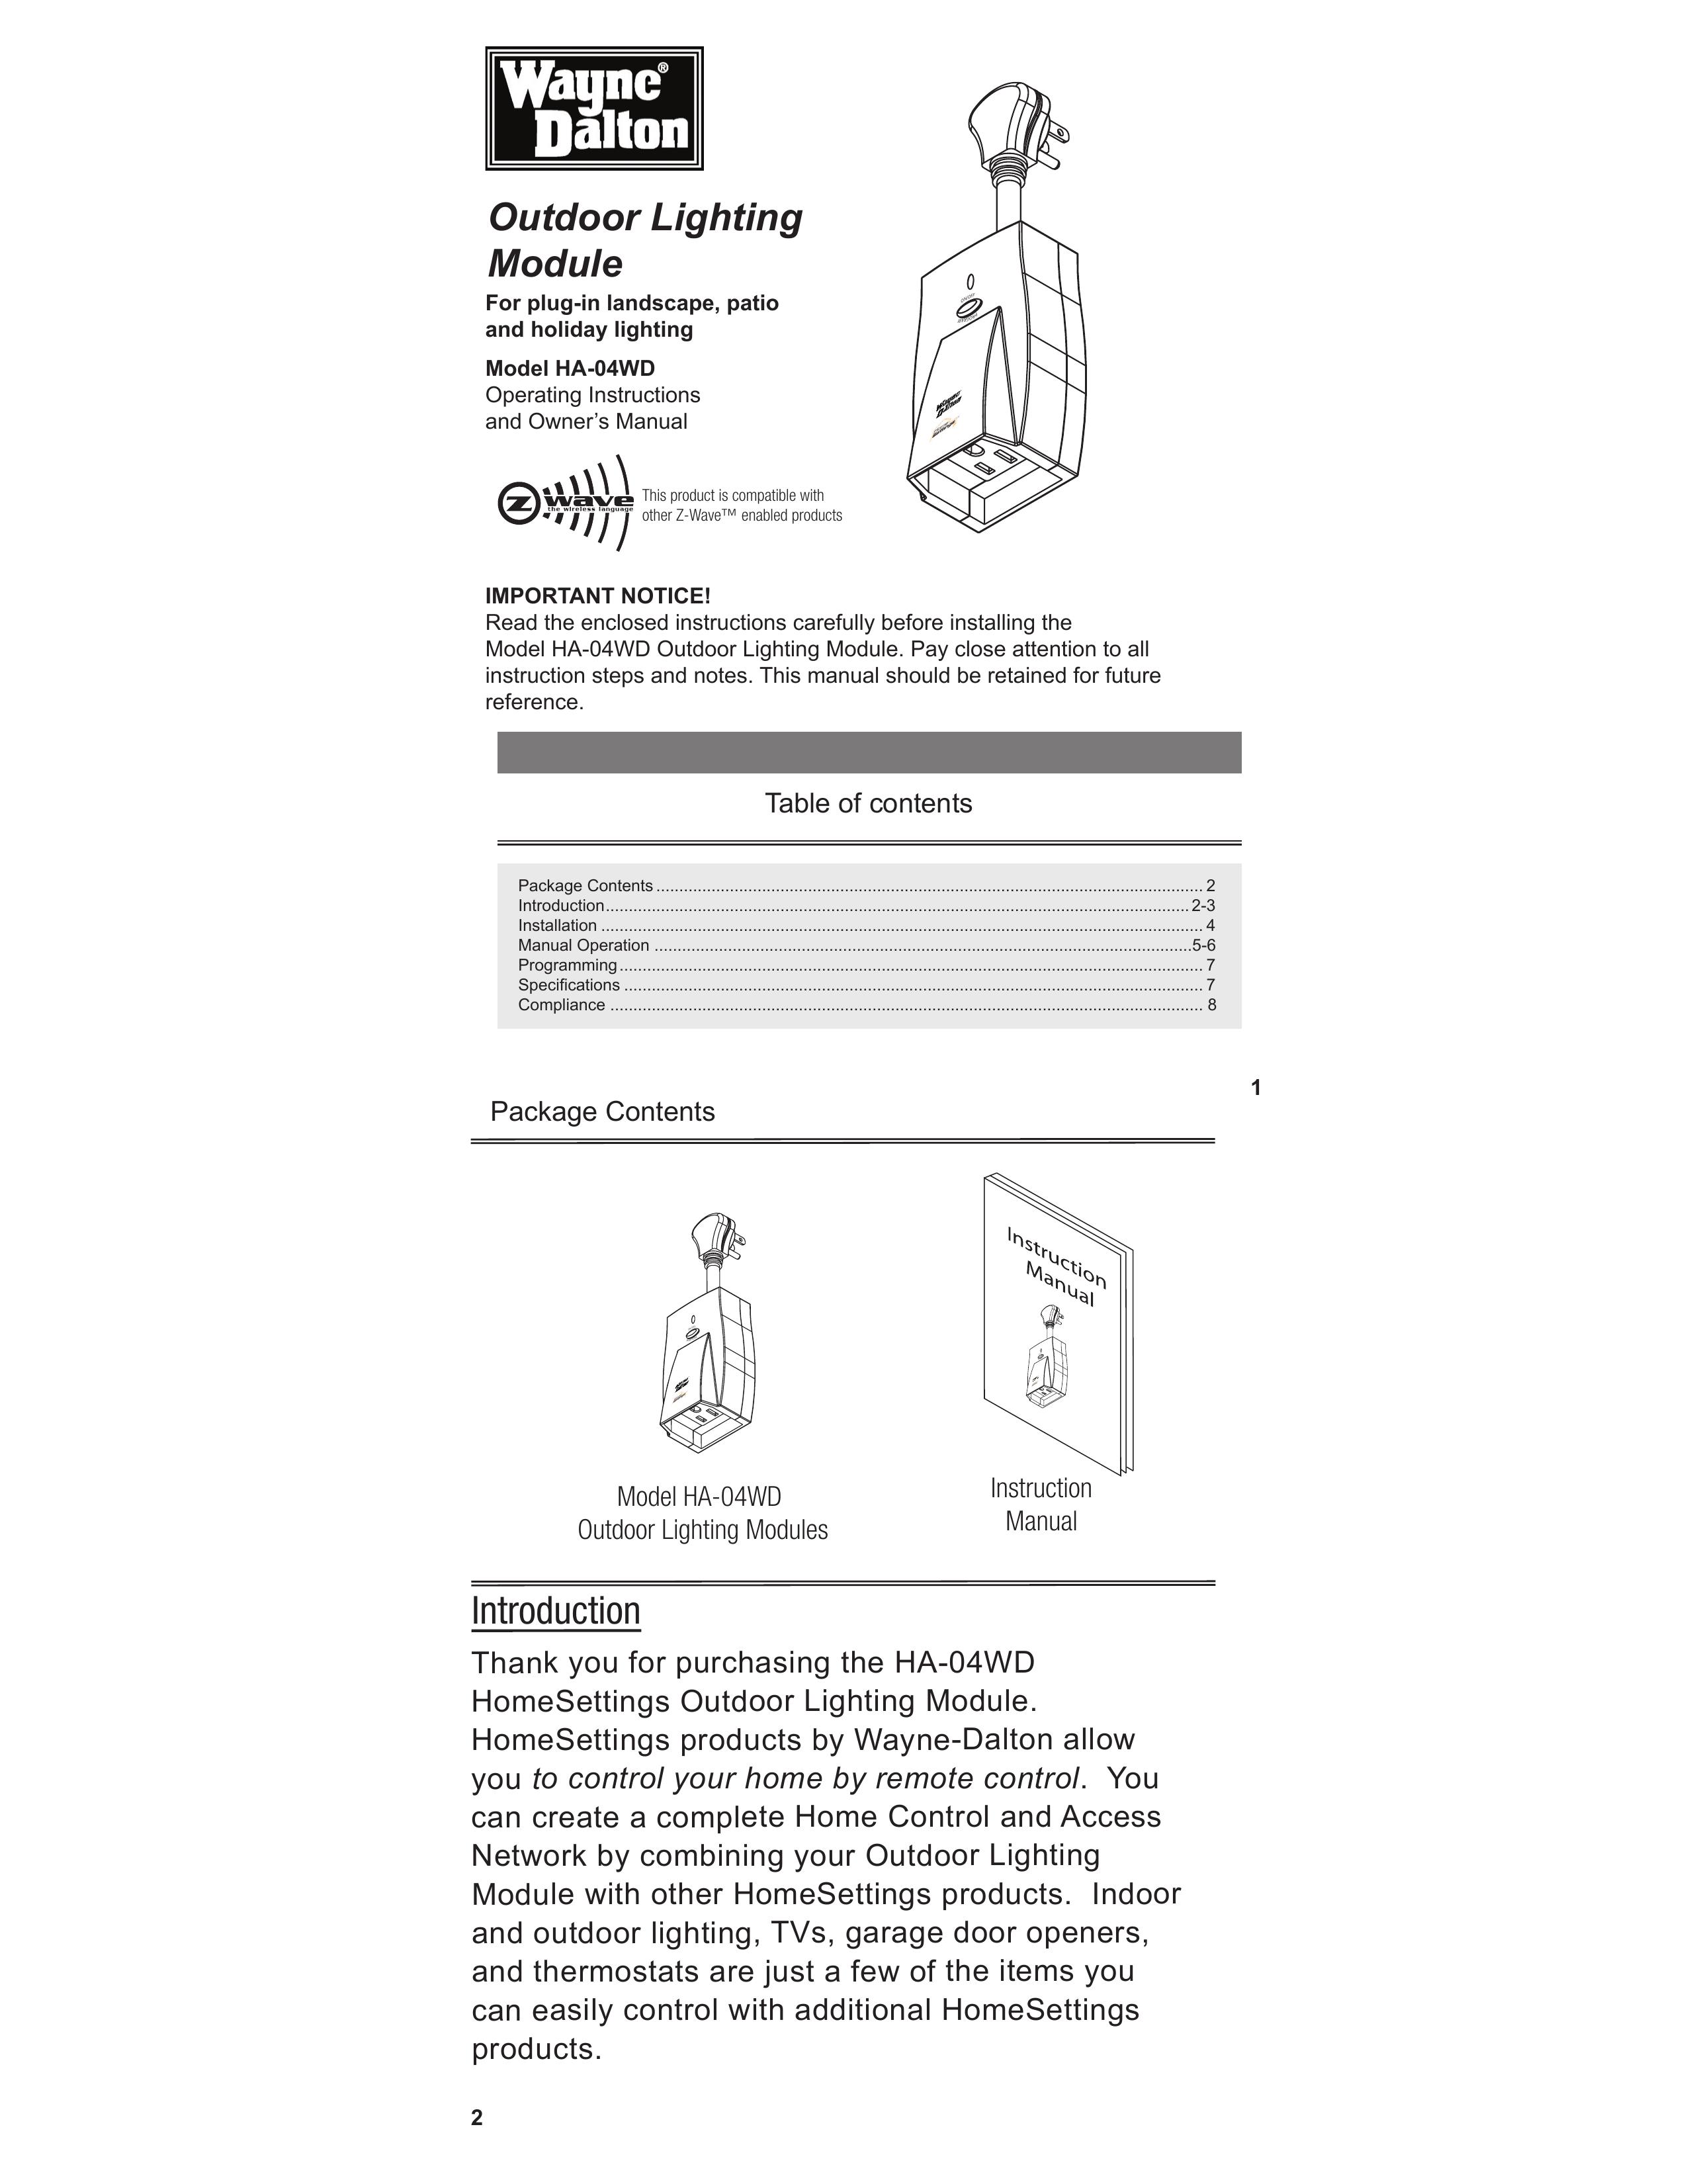 Wayne-Dalton HA-04WD Landscape Lighting User Manual